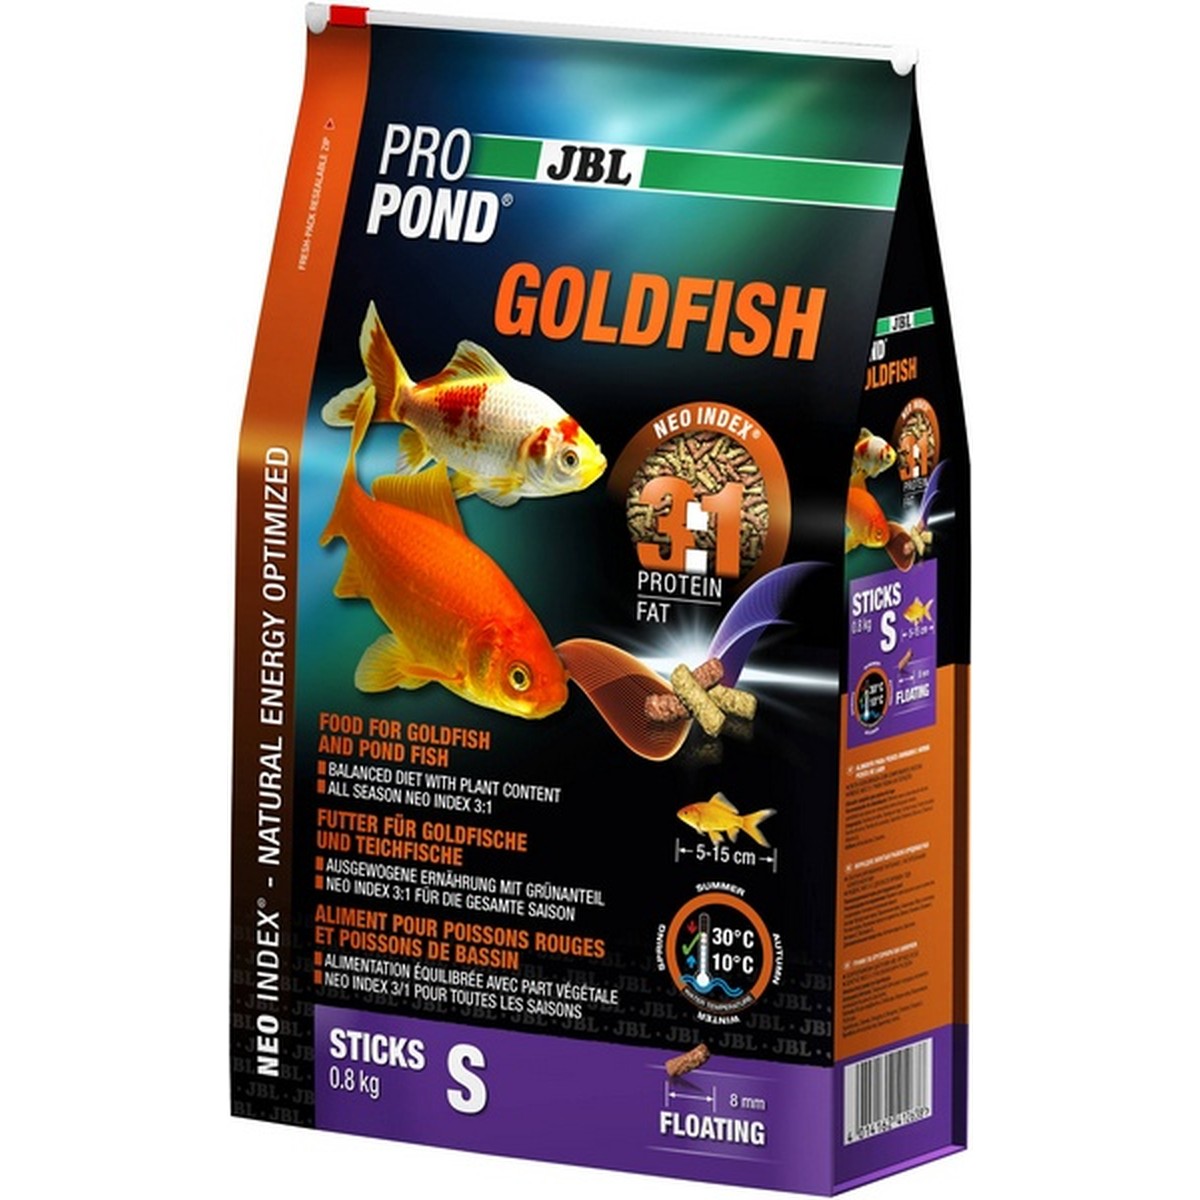   JBL ProPond Goldfish S, 800 g  800g